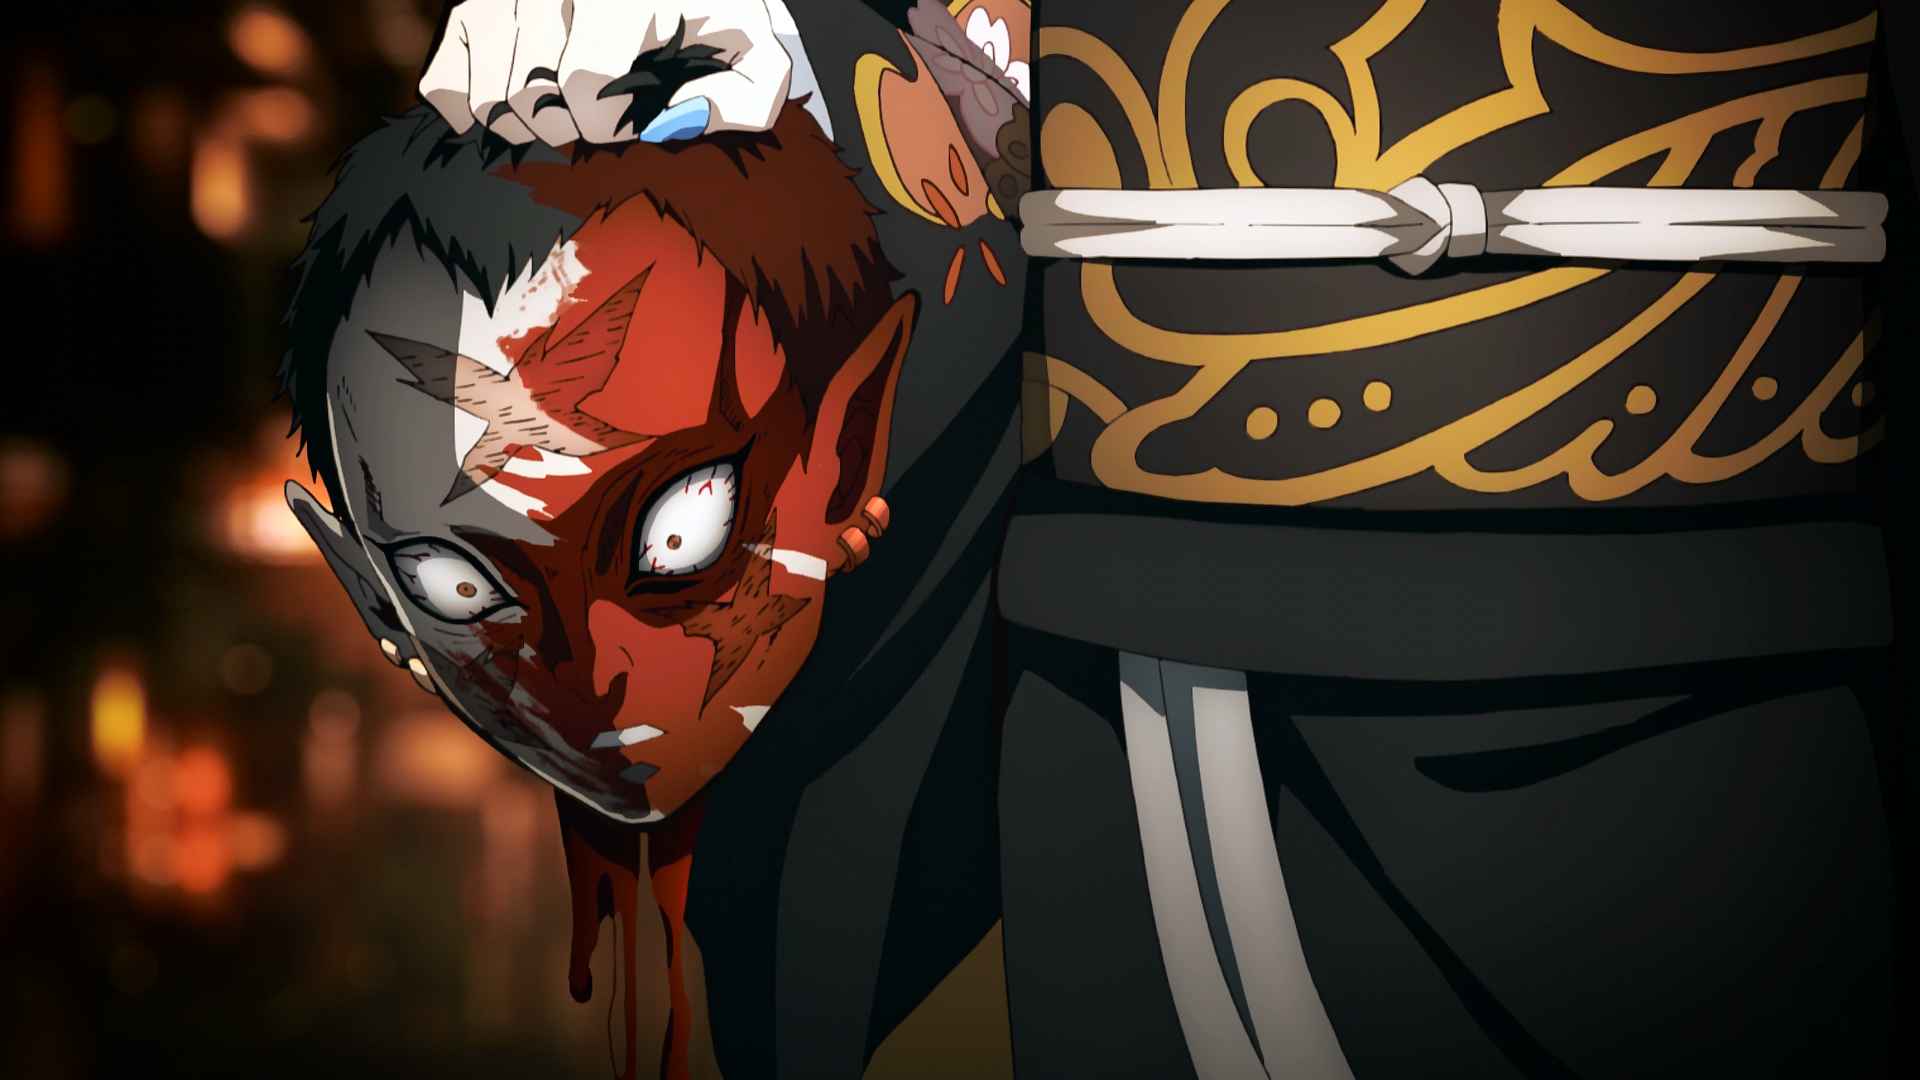 Demon Slayer: Kimetsu no Yaiba Anime Episodes 22-26 Also Get